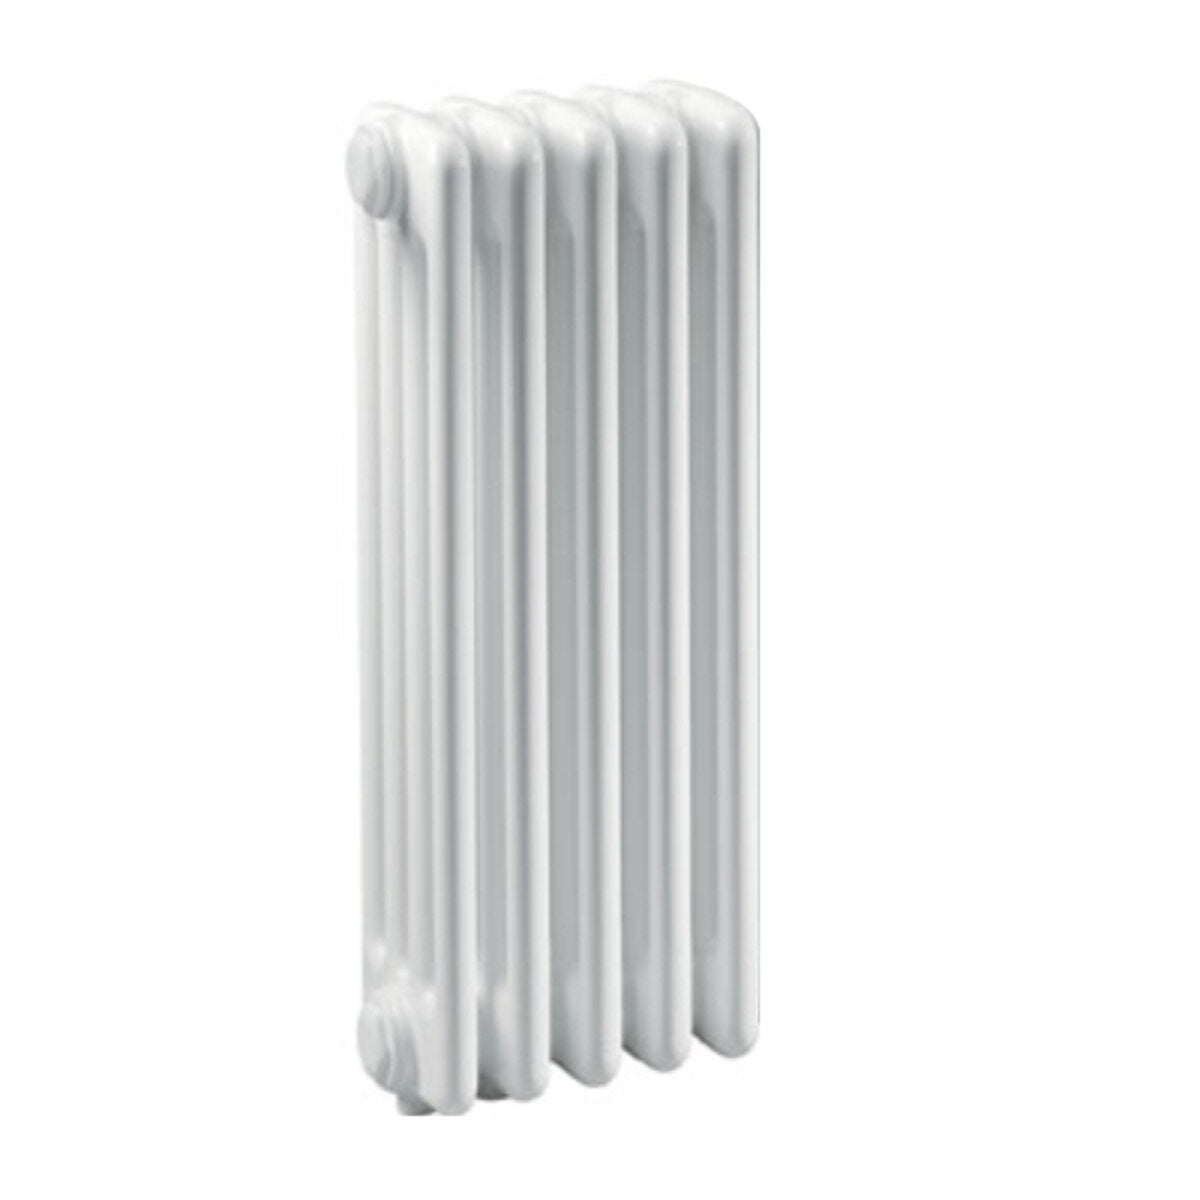 Ercos Comby steel column radiator 5 elements 3 columns center distance 600 mm